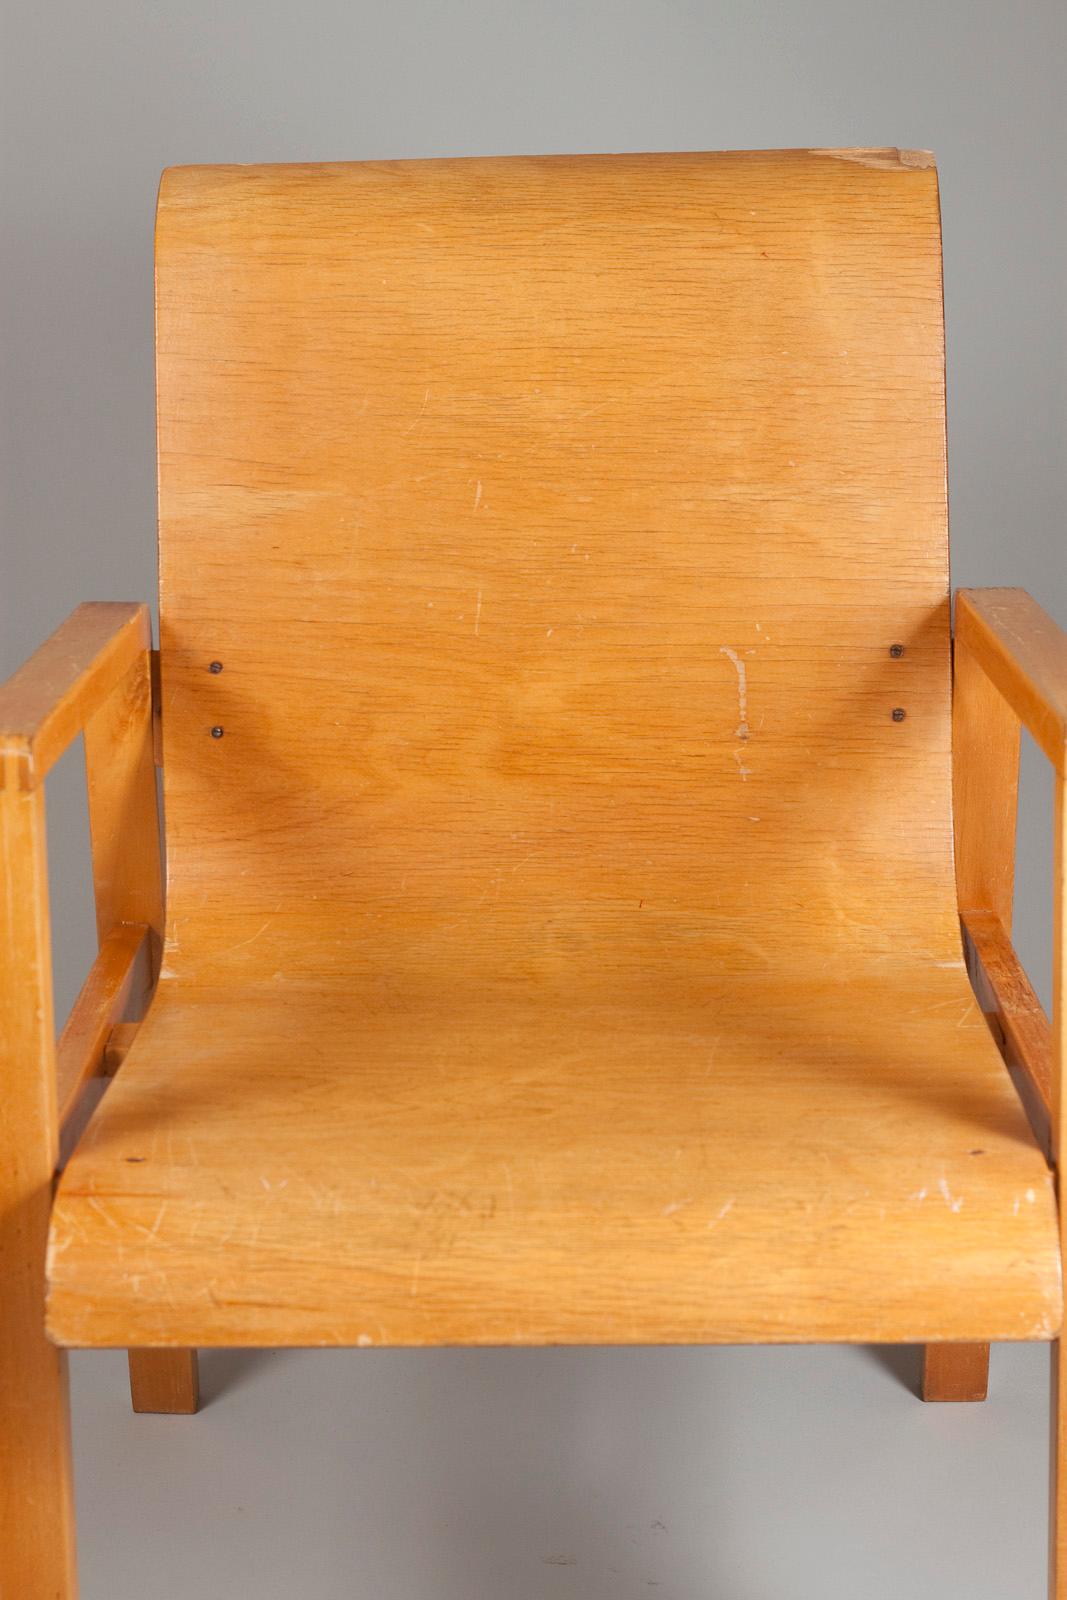 20th Century Alvar Aalto Early Hallway Chair 51/403 for Paimio Sanatorium 1932, Finland For Sale